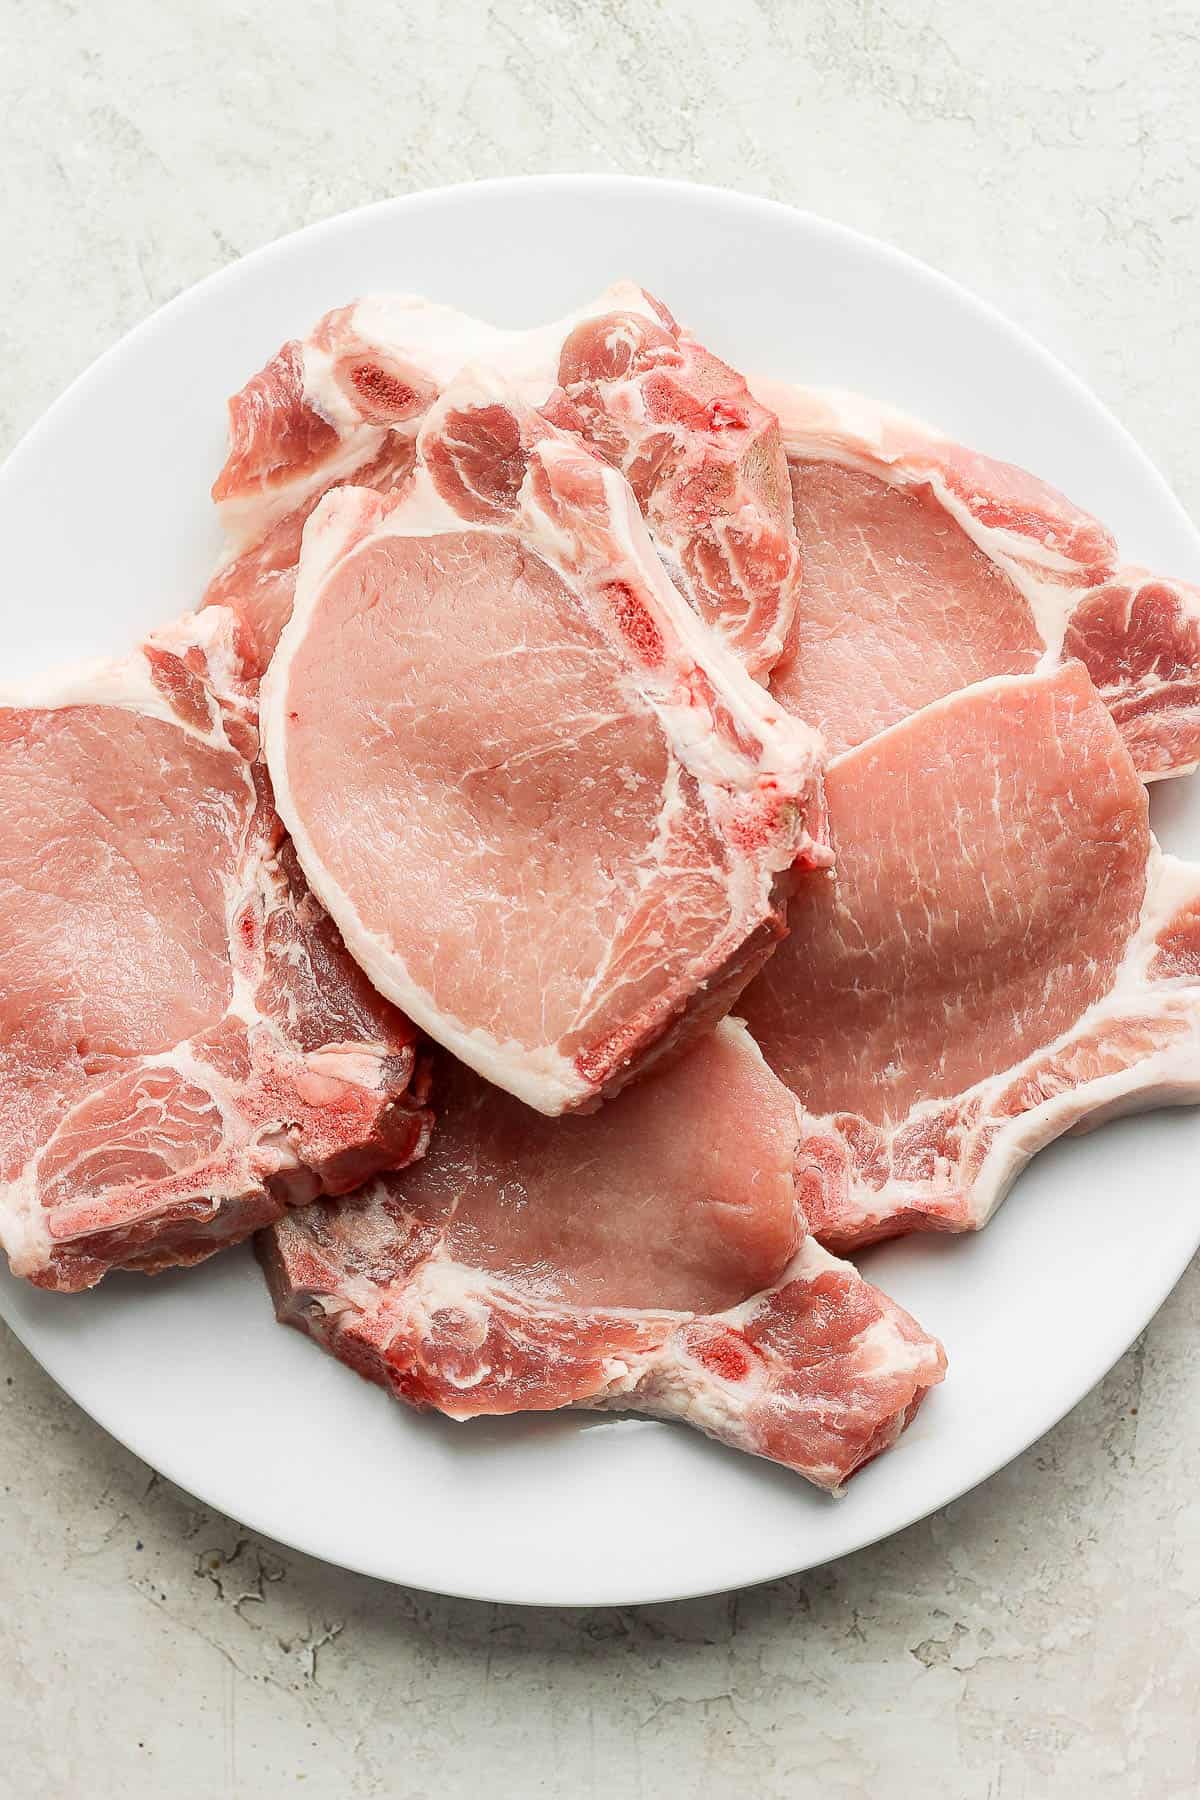 Plate of raw pork chops. 